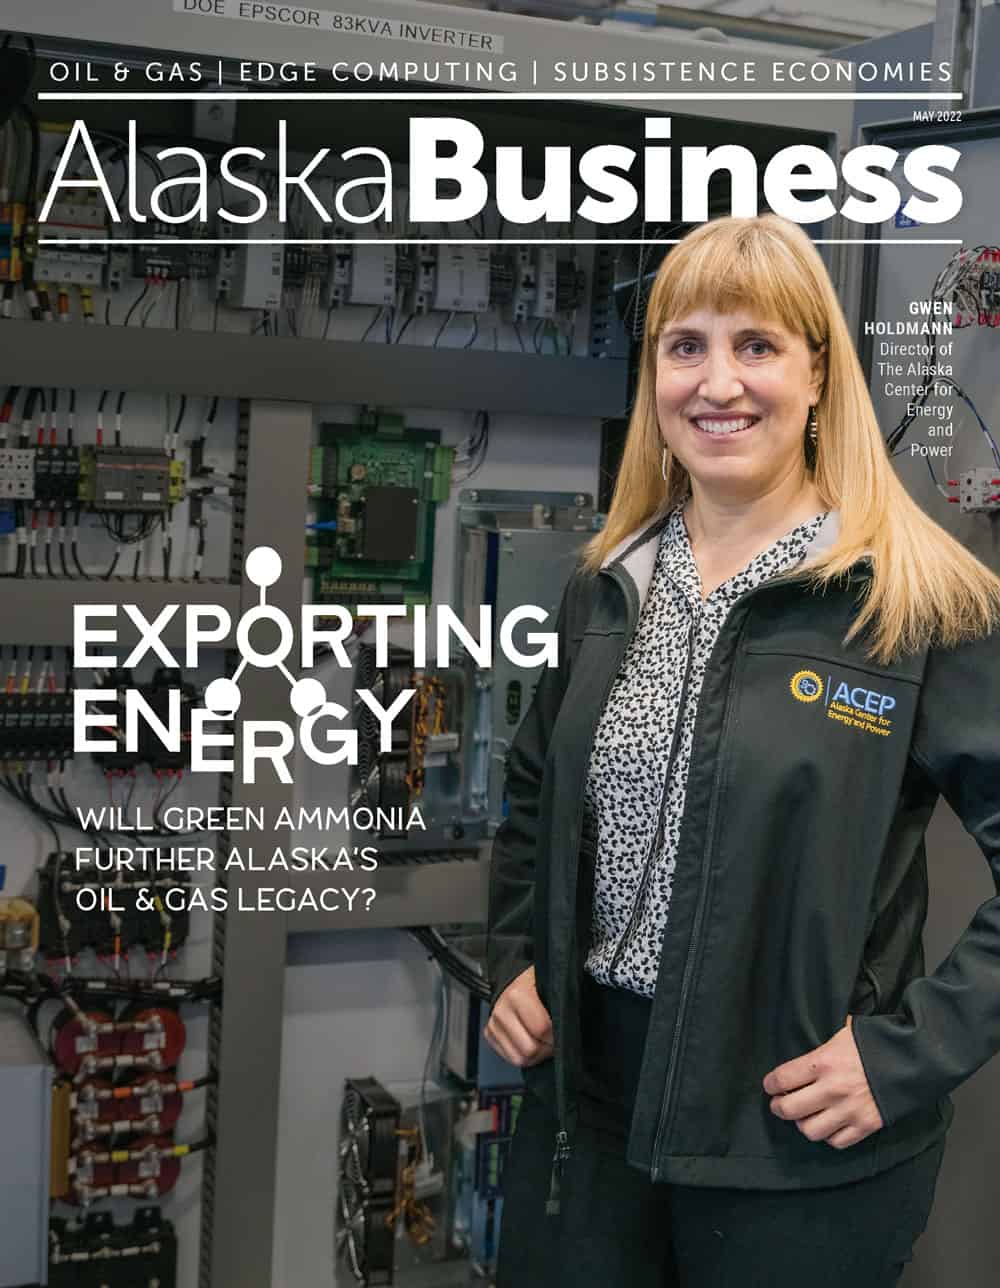 Alaska Business April 2022 cover